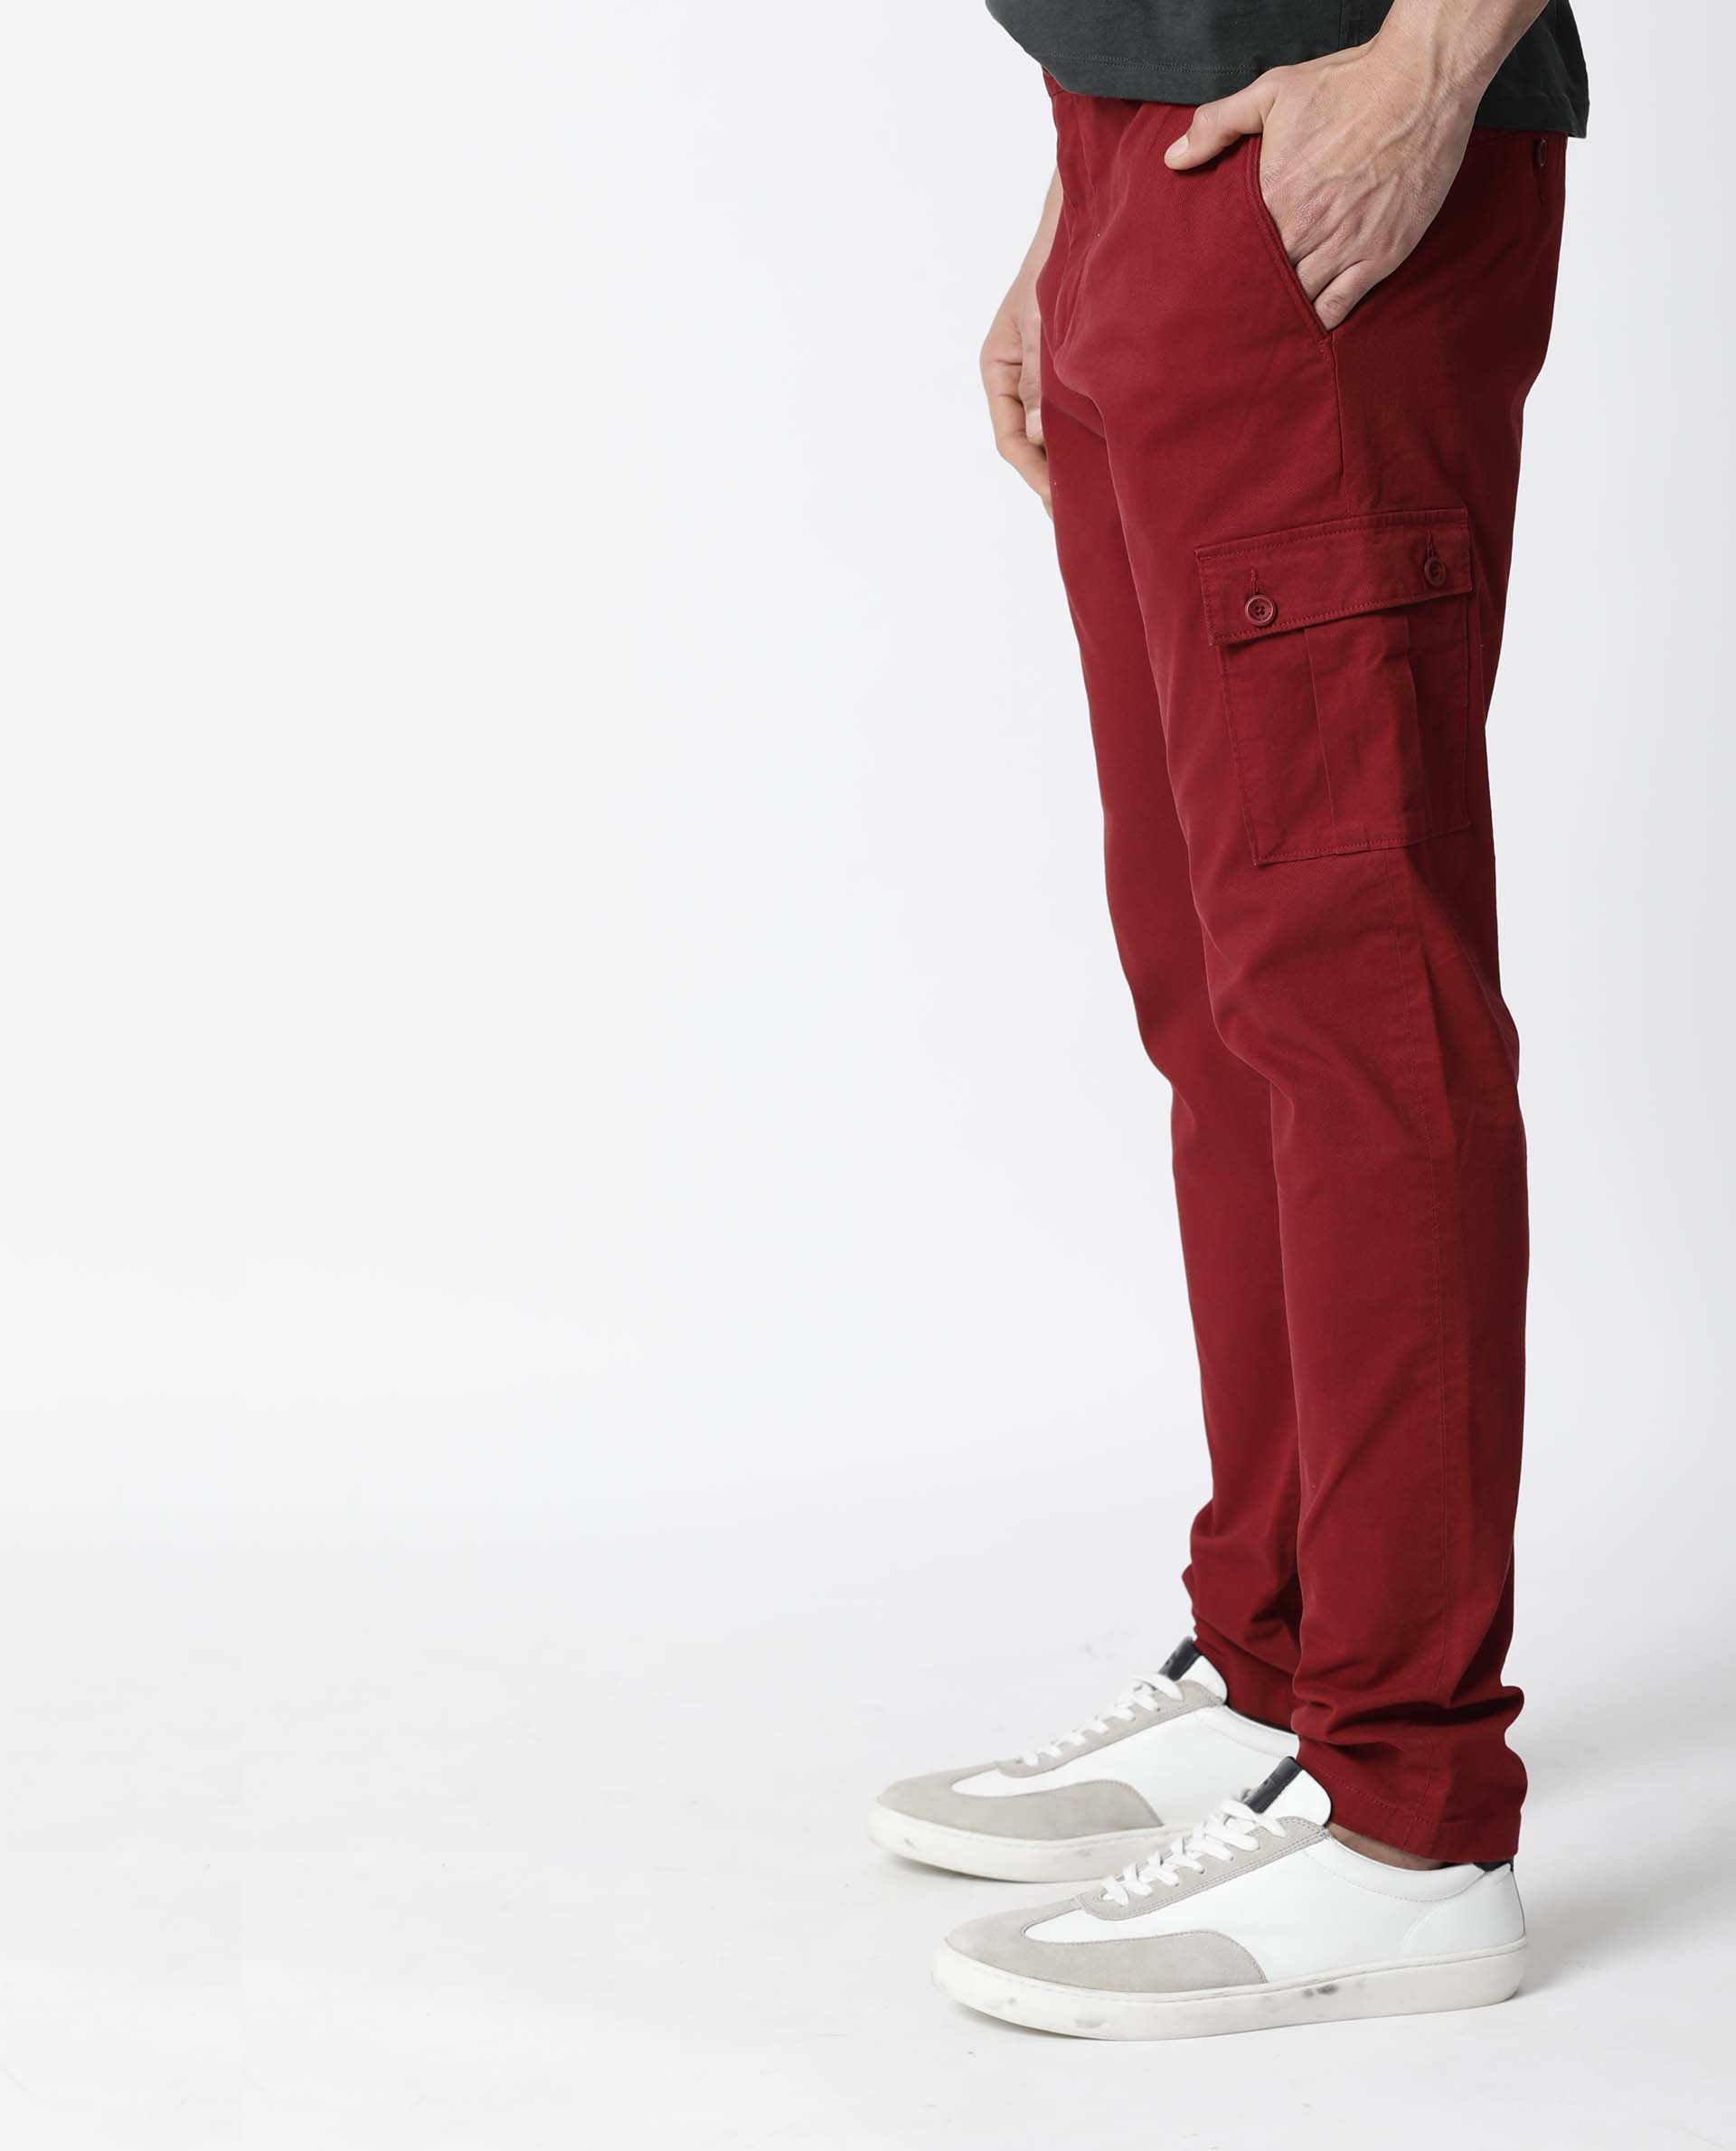 RAG & BONE Men's RB7 SLIM FIT COTTON PANTS Chinos Trousers Red Sz.30 | eBay